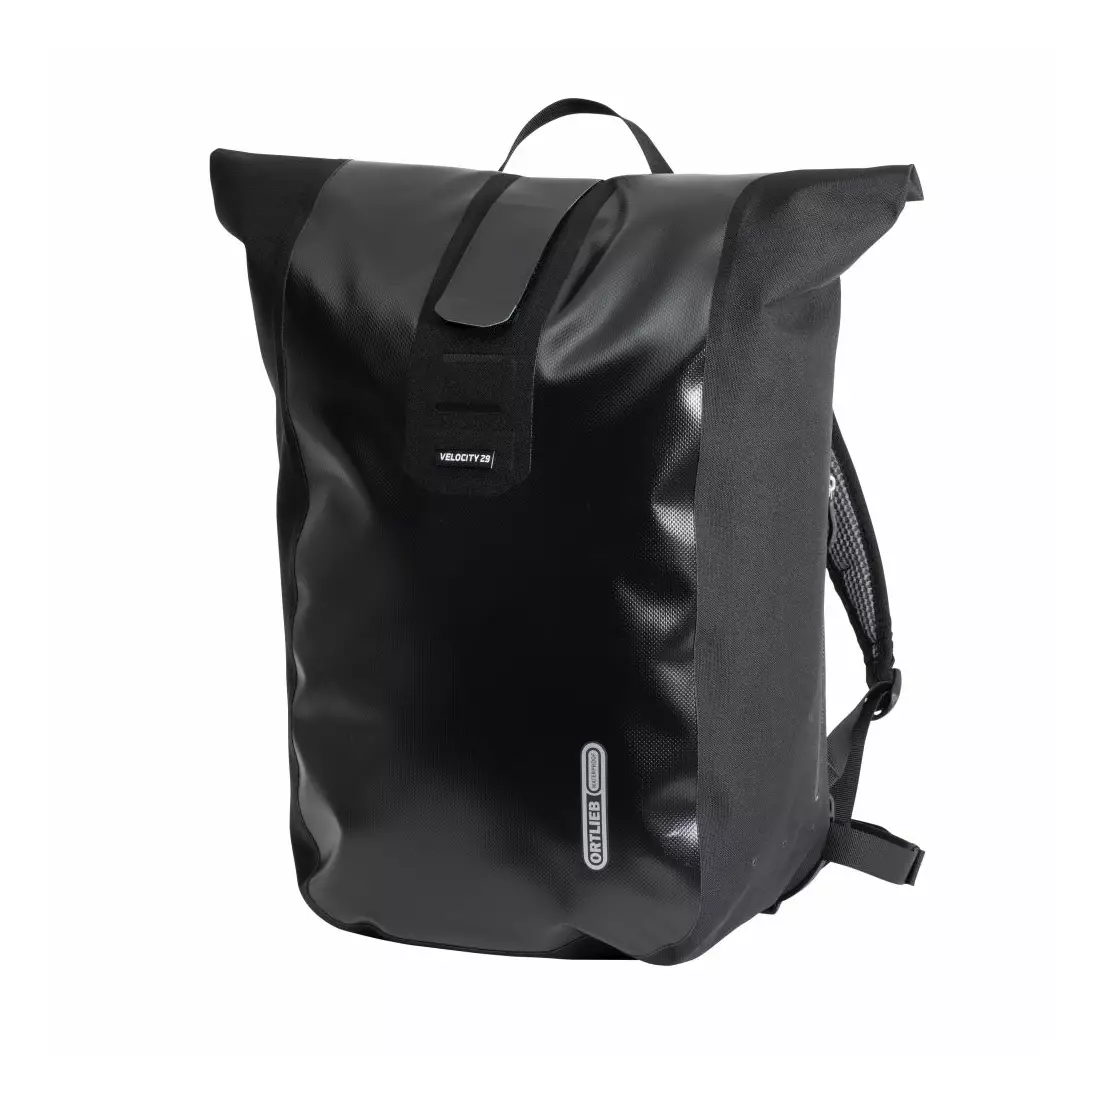 ORTLIEB wodoodporny plecak VELOCITY 29L black O-R4350